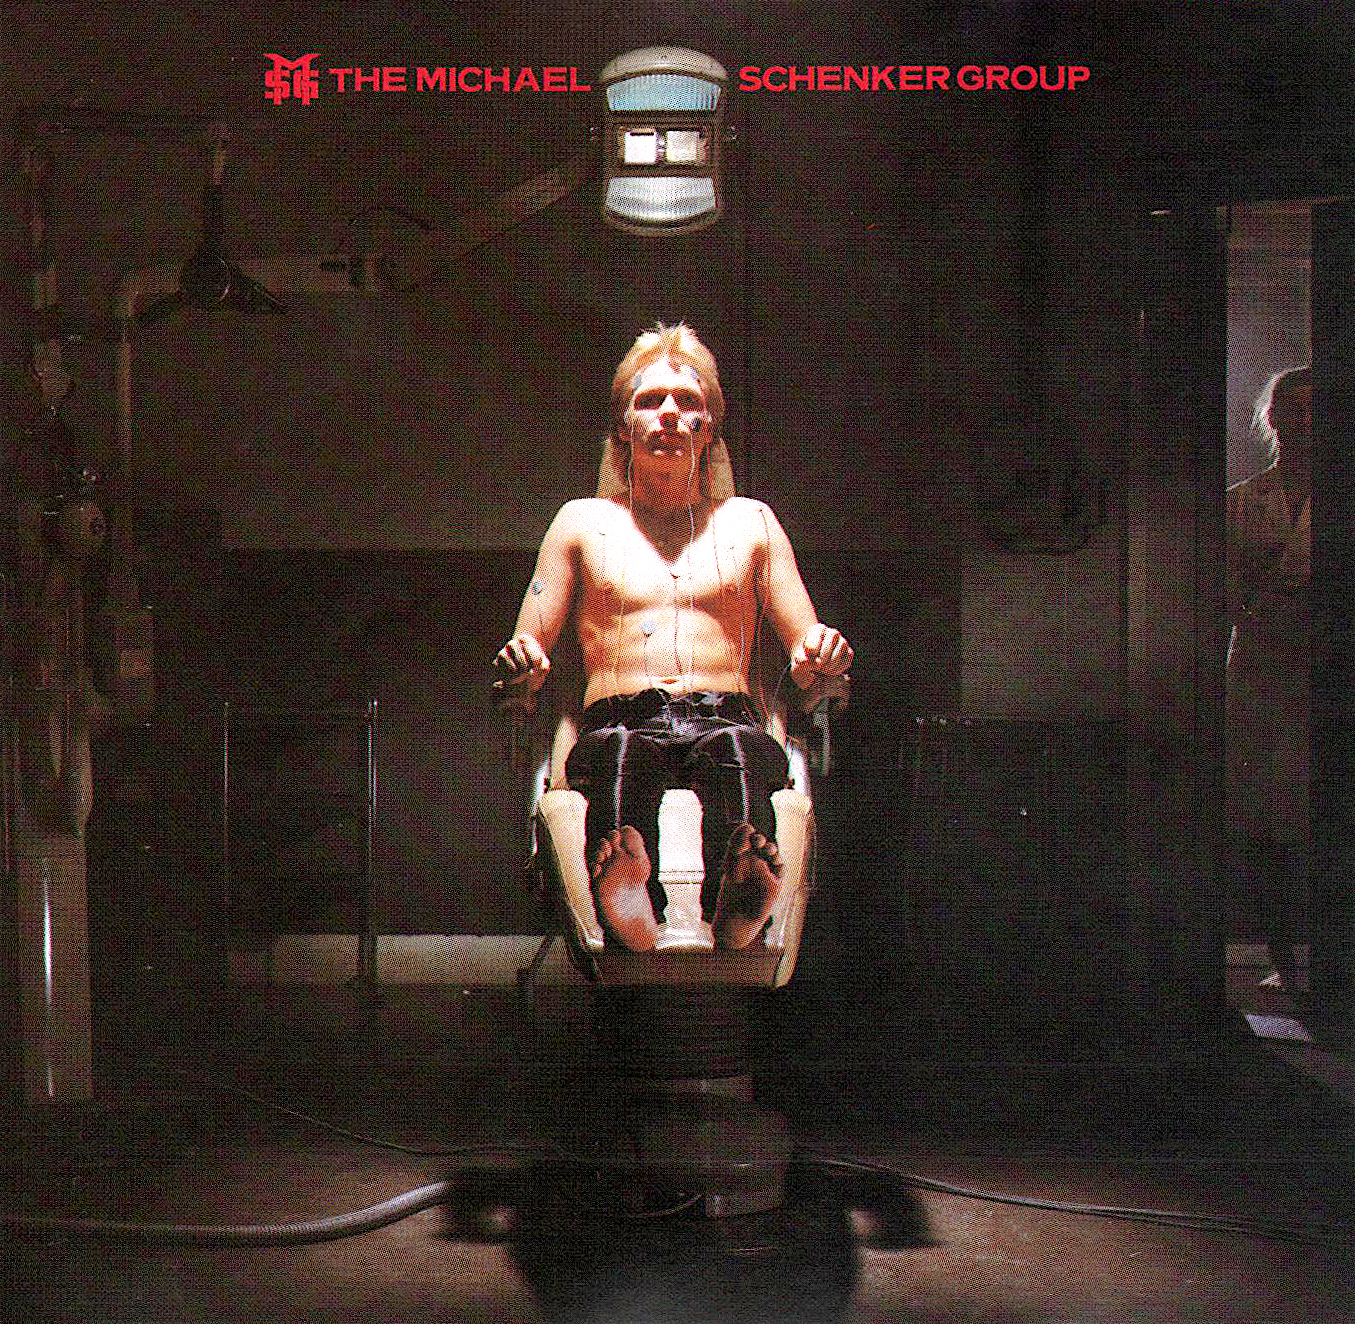 MICHAEL SCHENKER GROUP - The Michael Schenker Group cover 